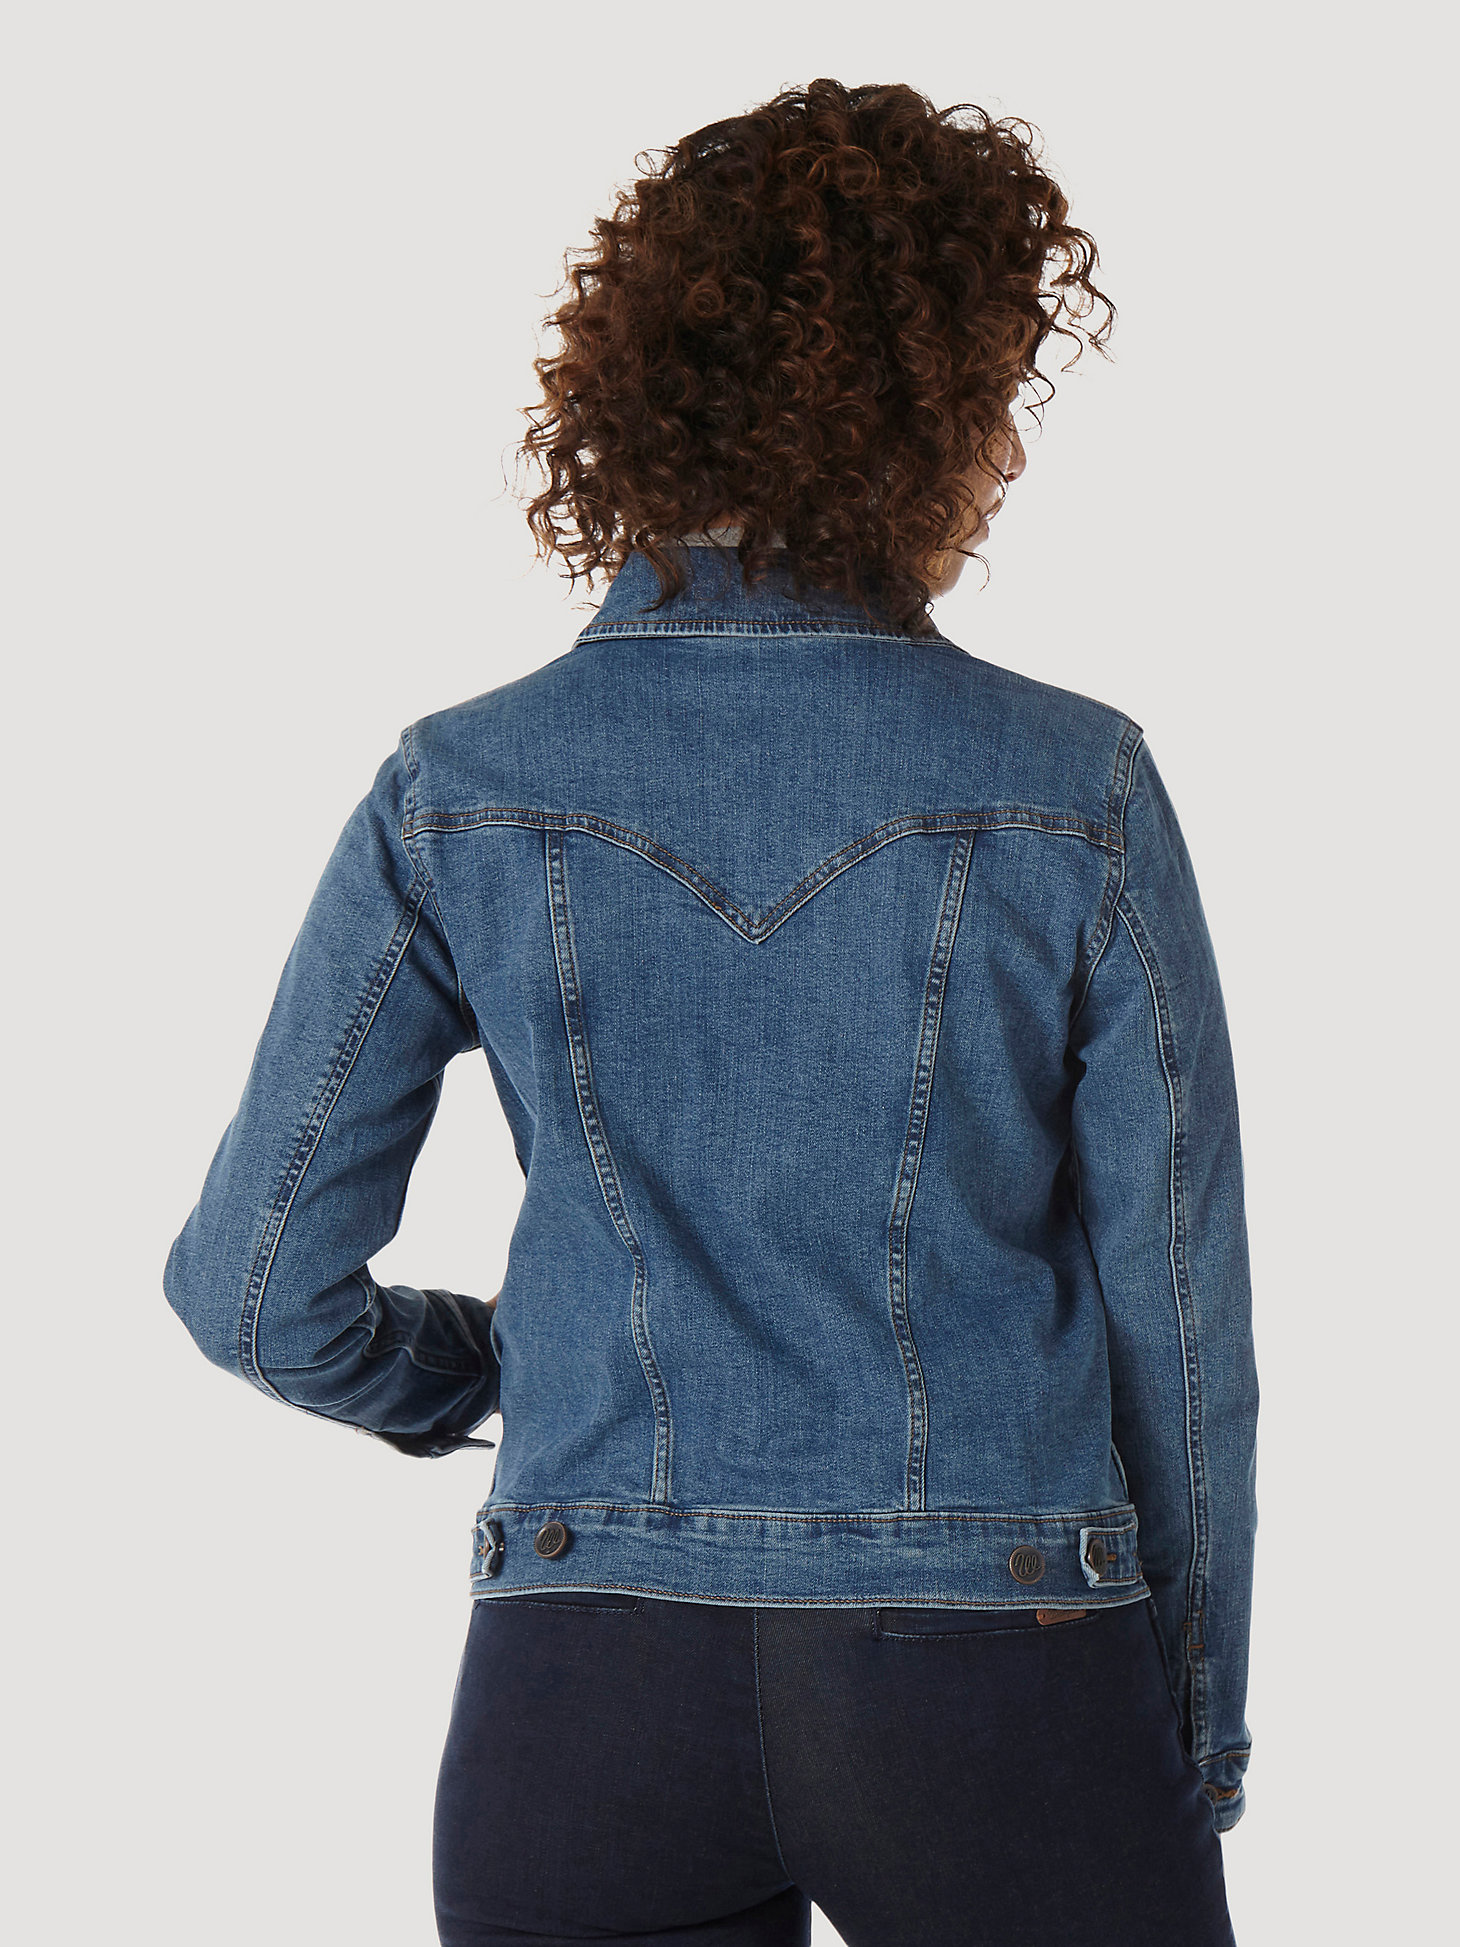 Women's Long Sleeve Classic Fit Denim Jacket in Dark Denim alternative view 5